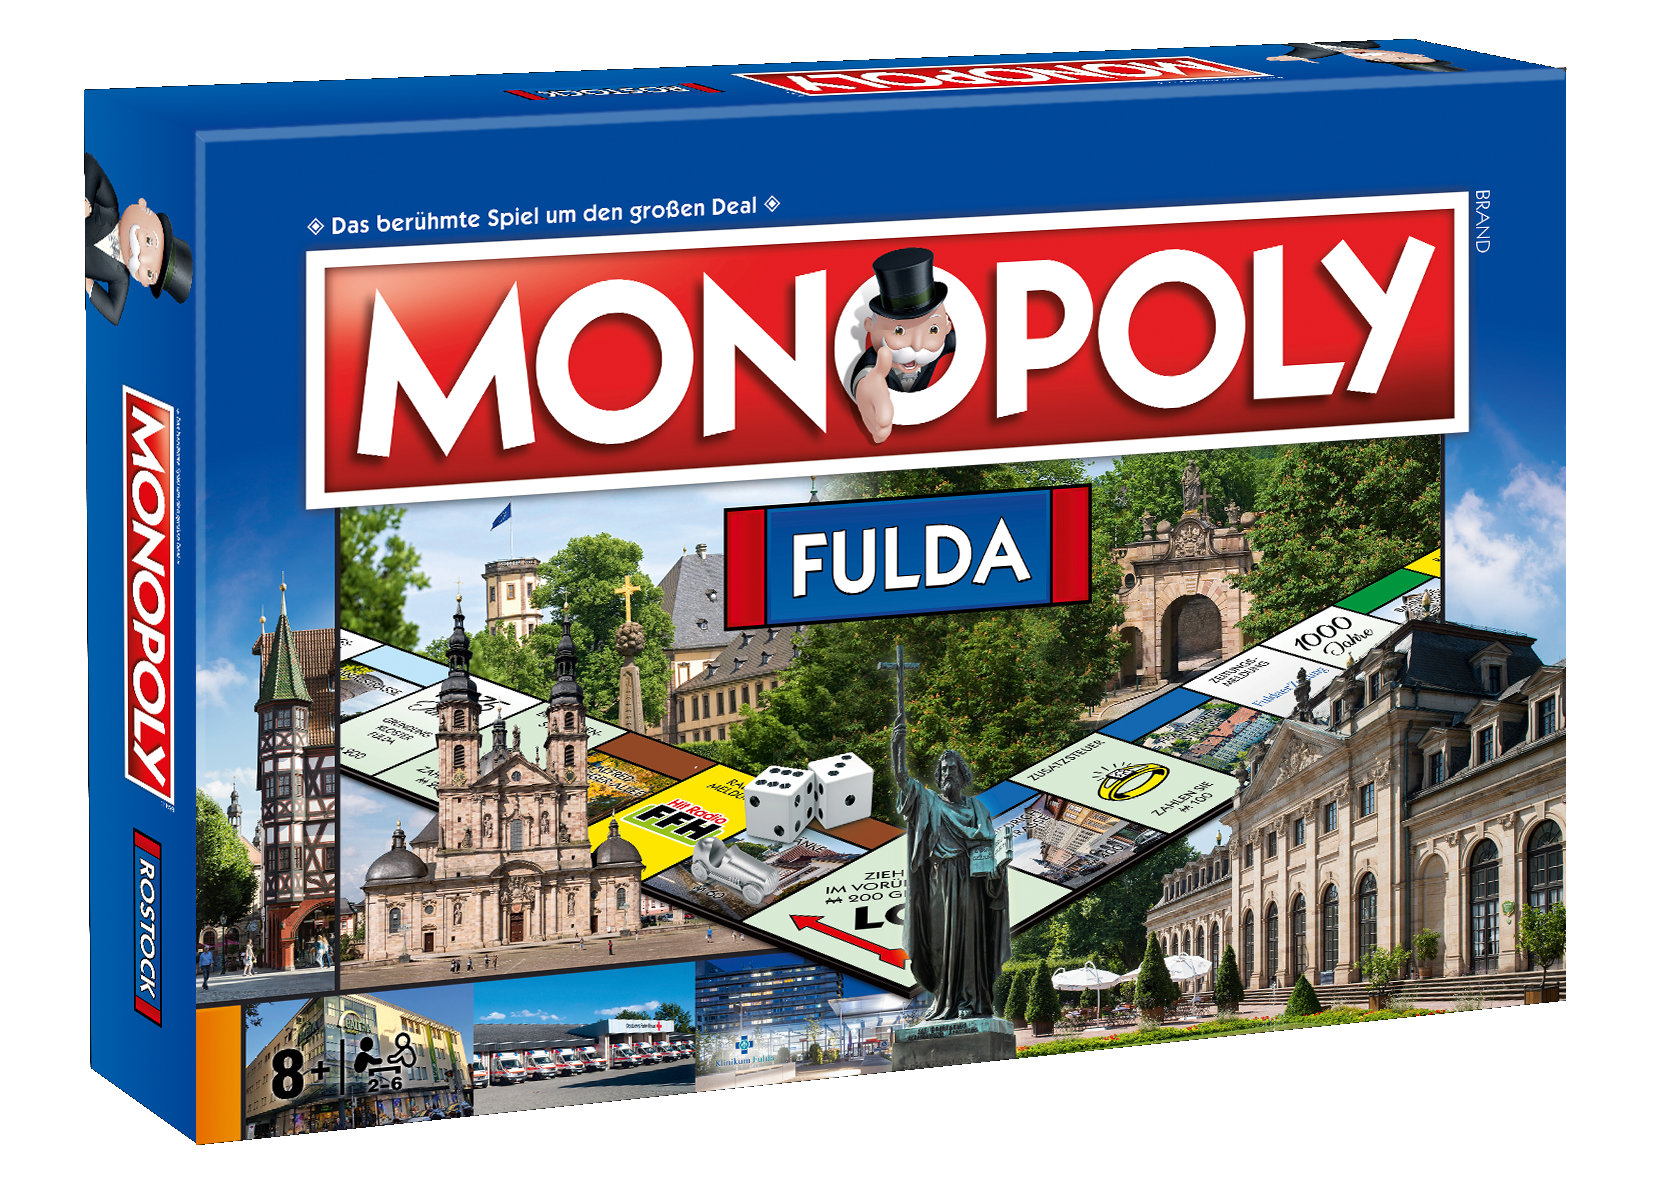 Monopoly Fulda